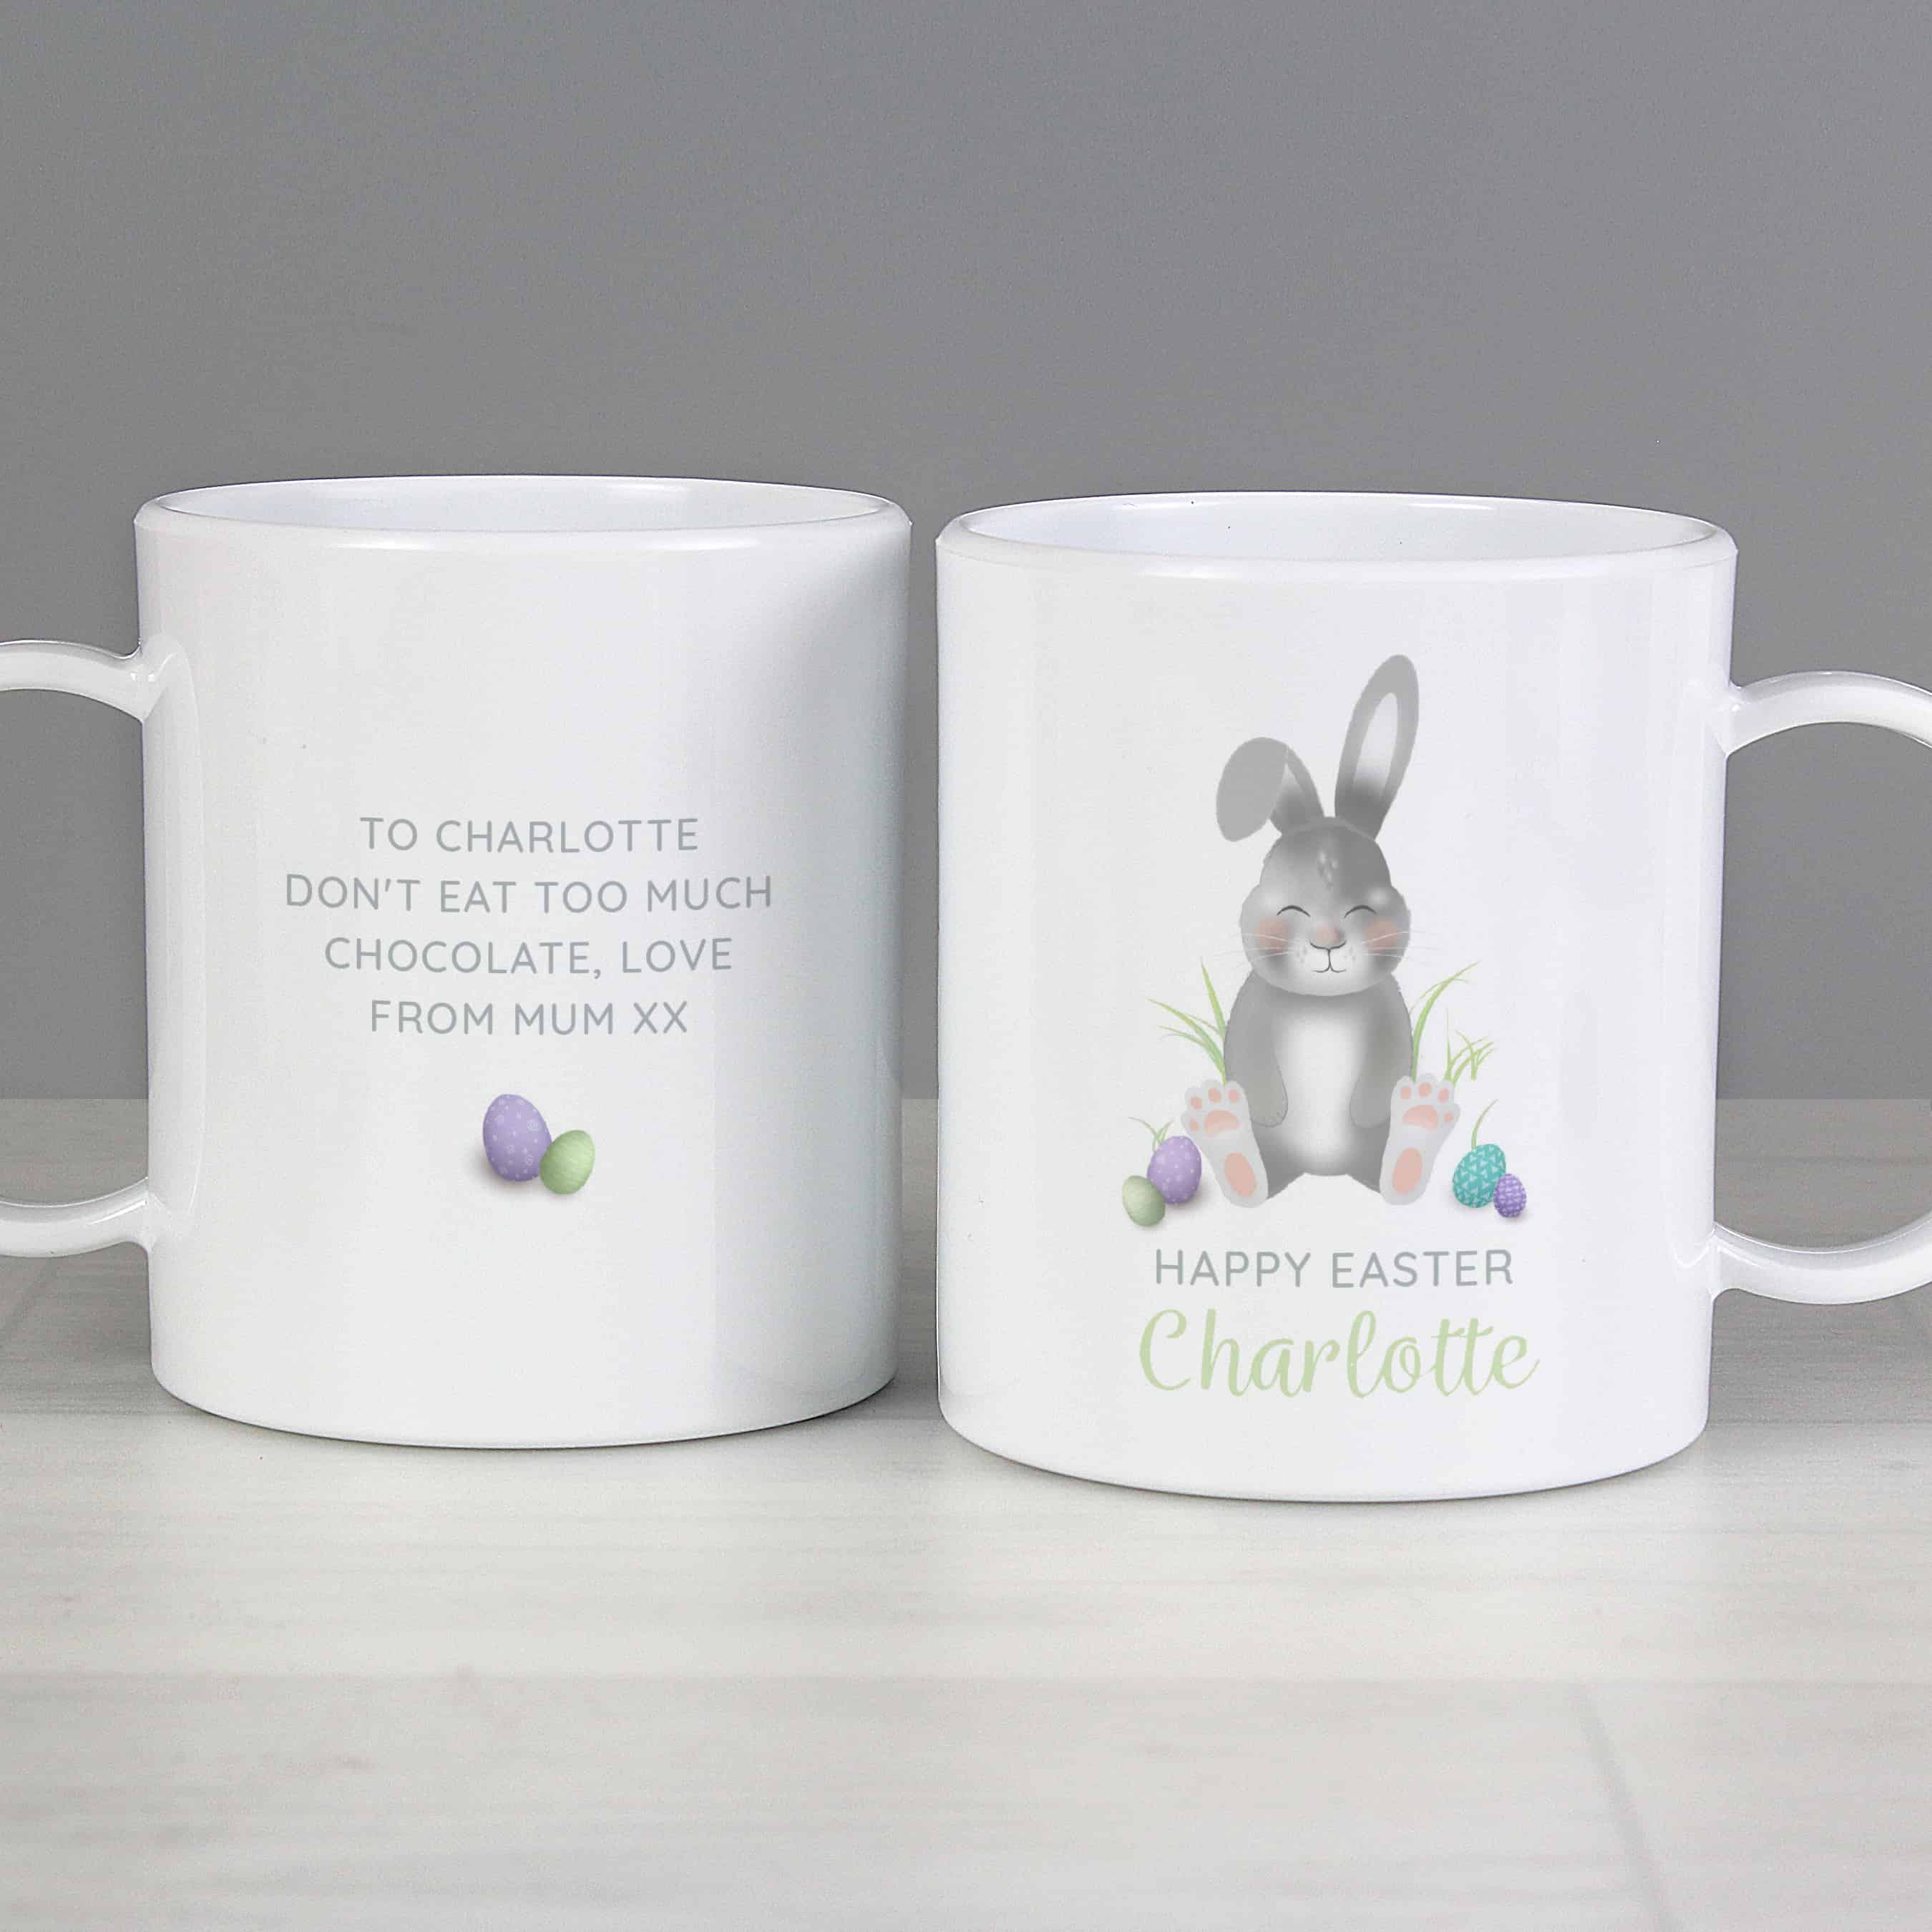 personalised Easter Bunny Plastic Mug